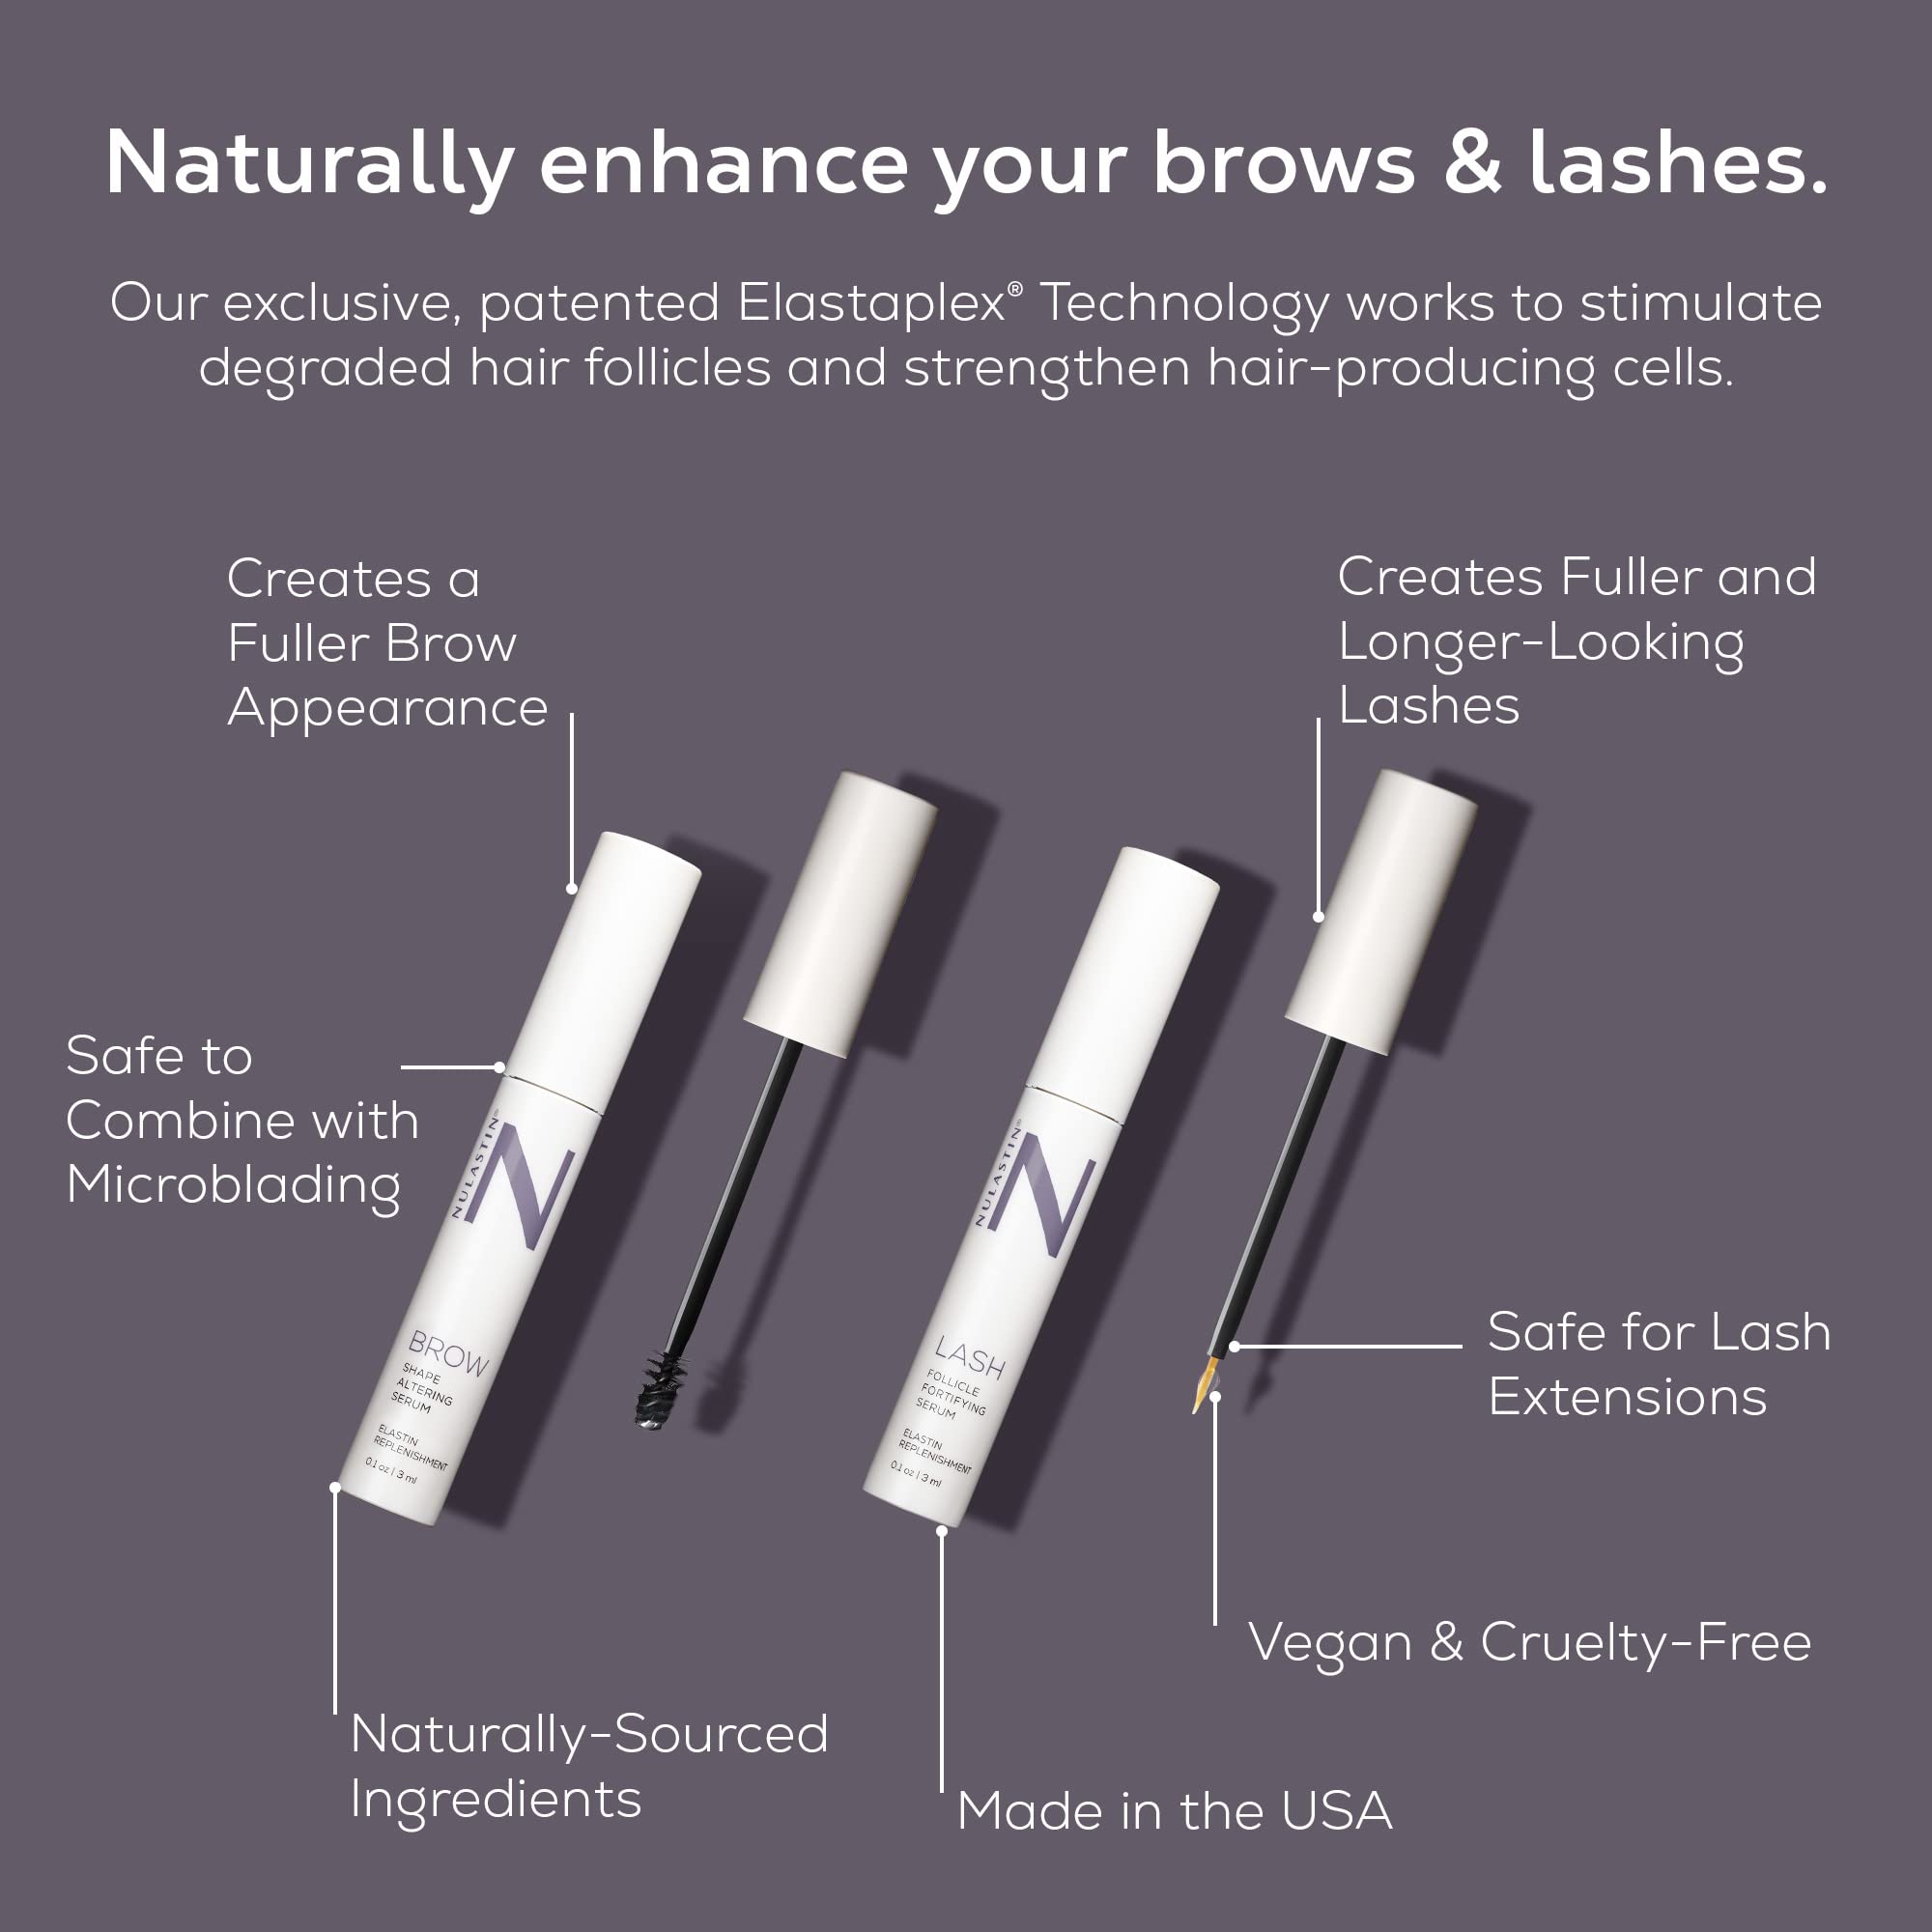 NULASTIN LASH and BROW Dual System, Eyelash & Eyebrow Boosting Serums with Elastaplex Technology, Vegan-Friendly & Cruelty-Free (2-pack, 3 ml Each)